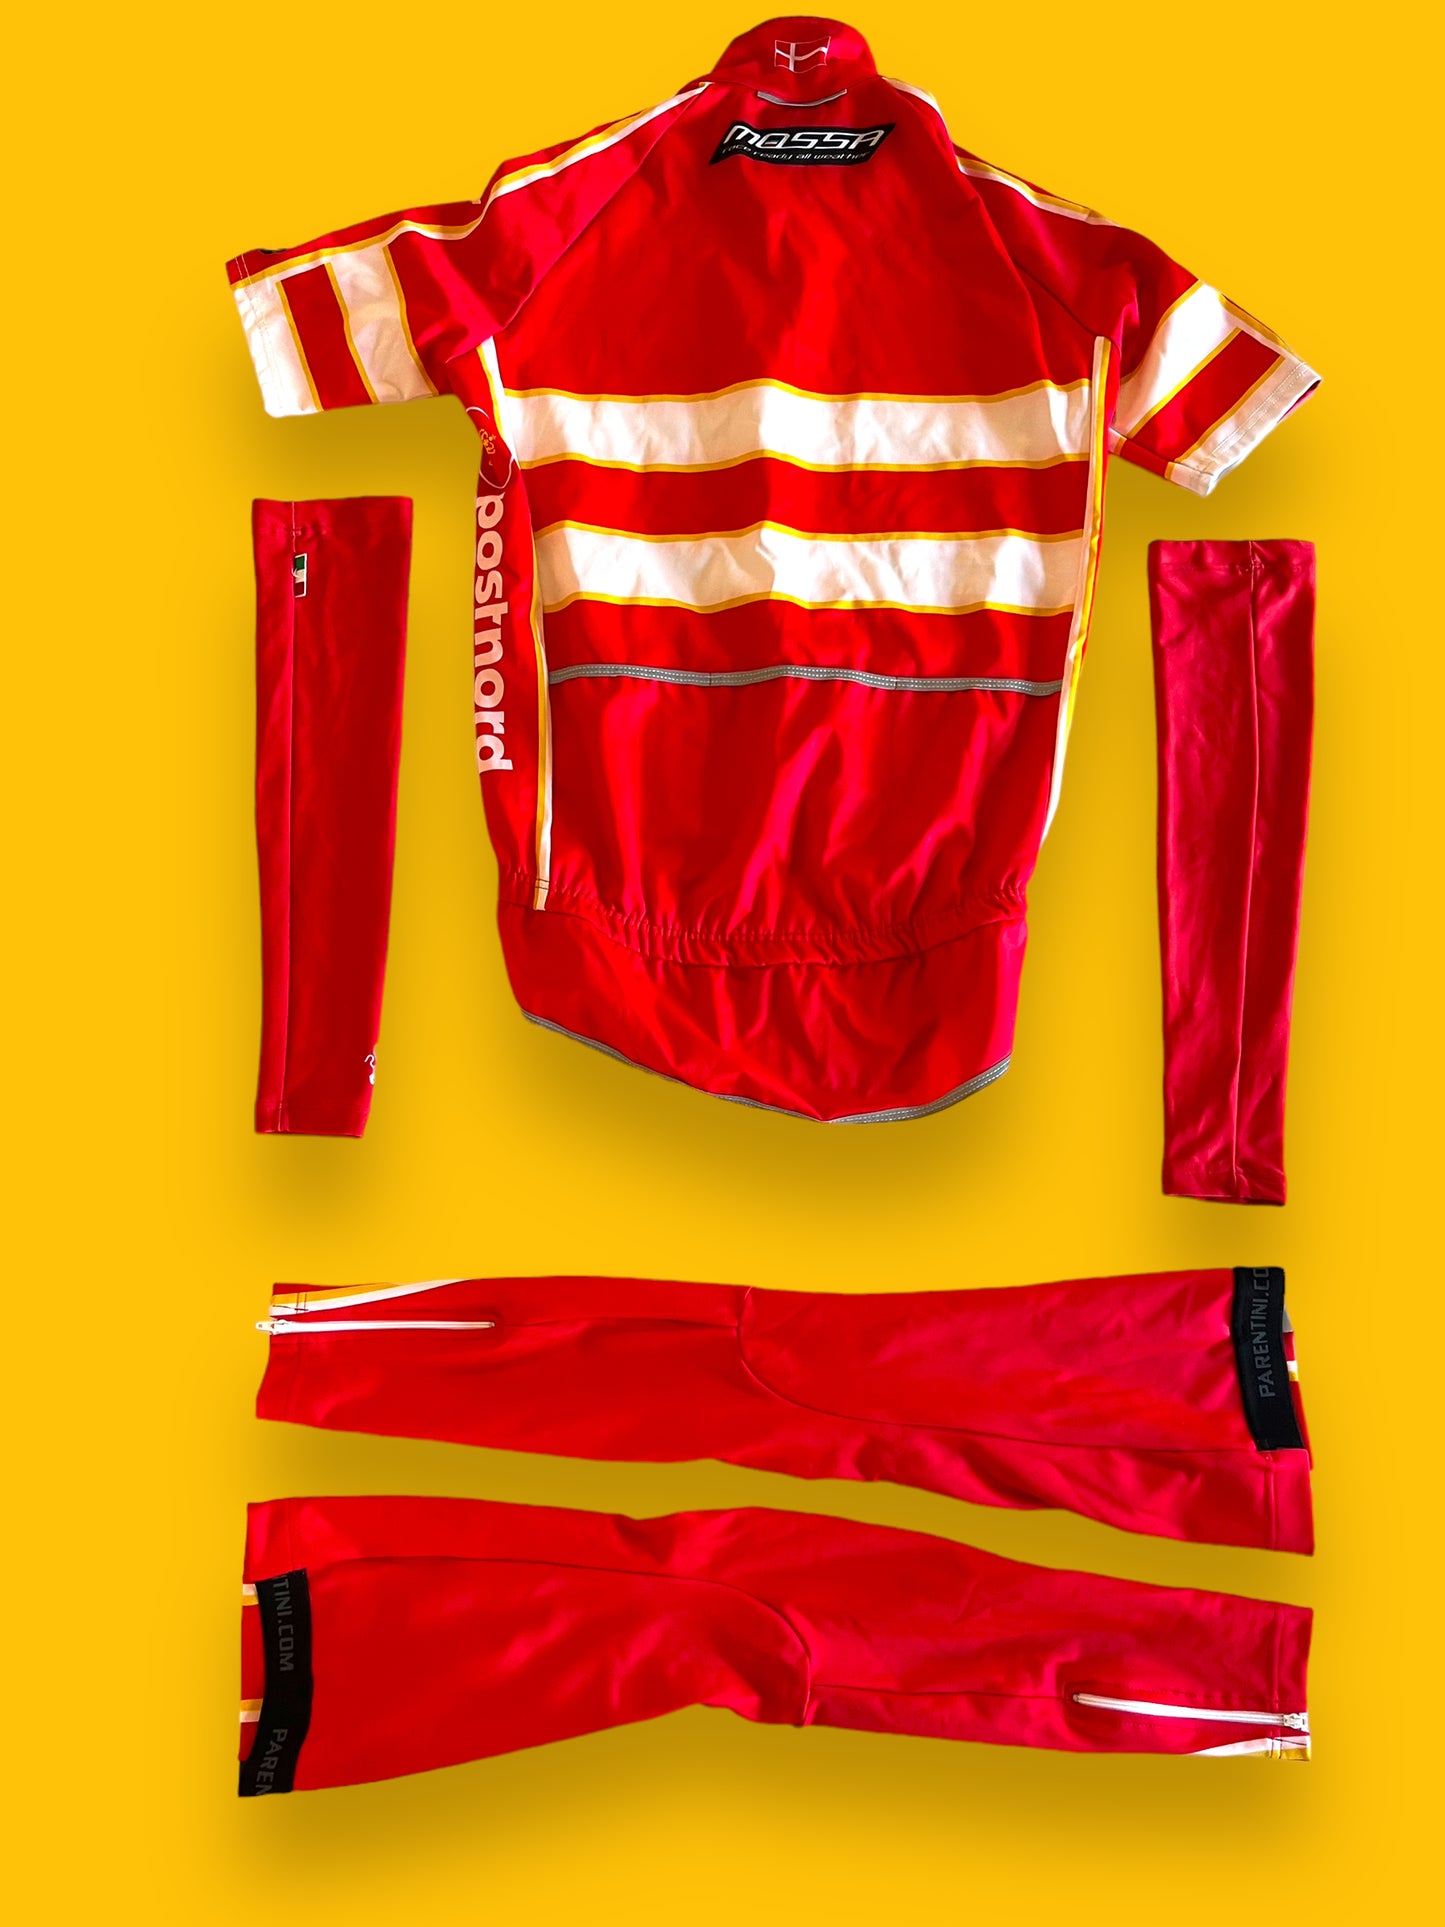 Cycling Kit Bundle - Short Sleeve Gabba Jersey & Leg Warmers | Parentini | Danish / Denmark National Team | Pro Cycling Kit